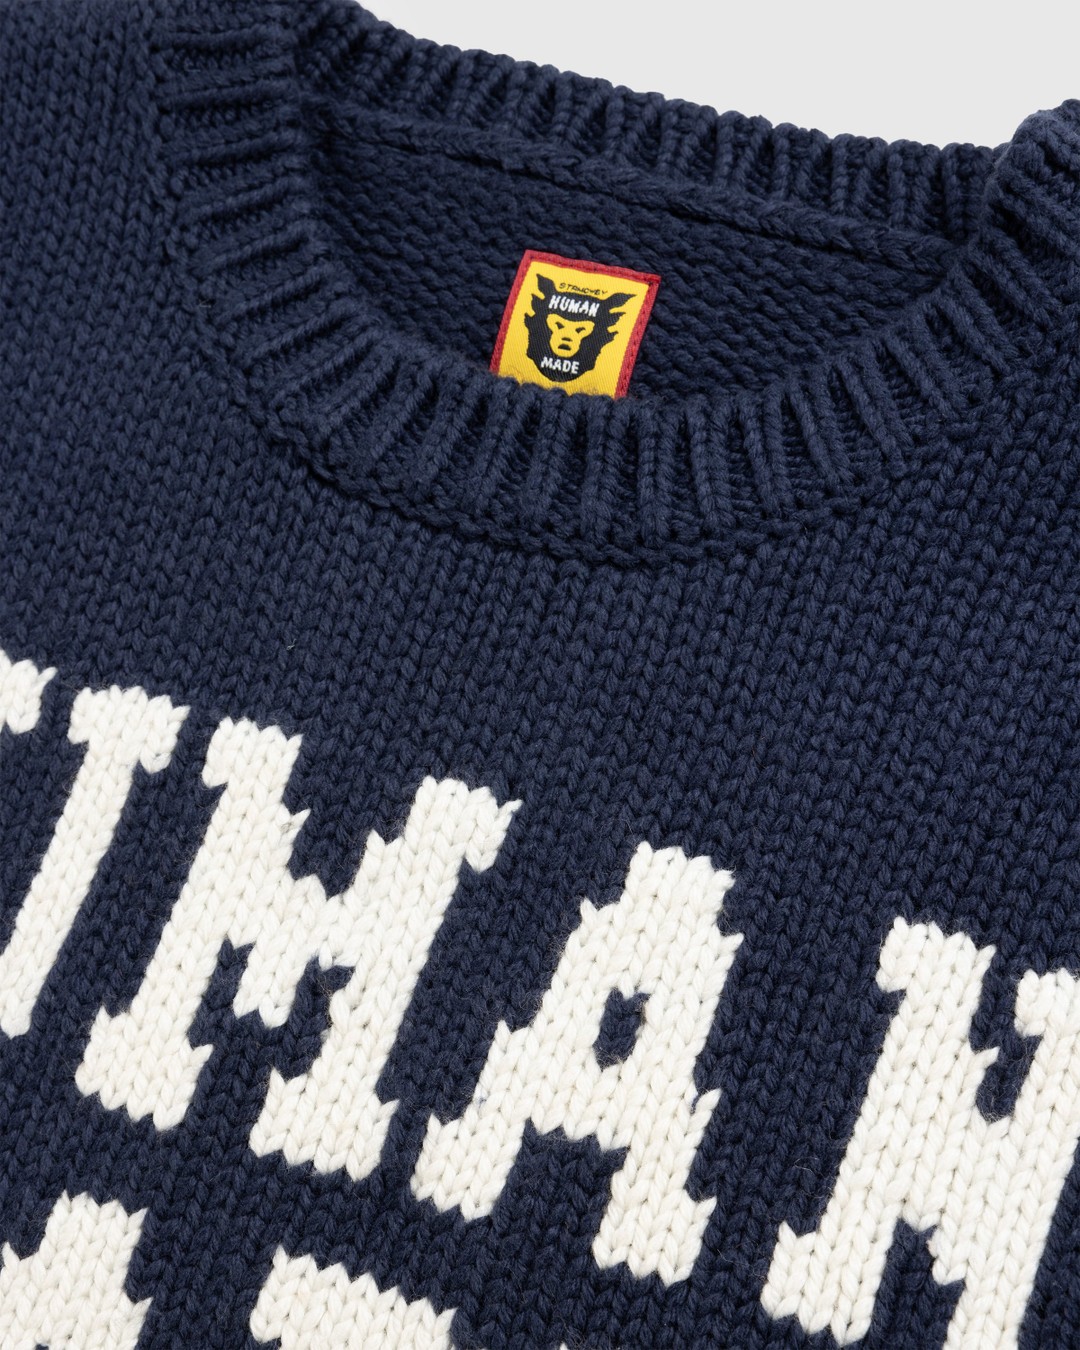 Human Made – Dachs Knit Sweater Navy | Highsnobiety Shop